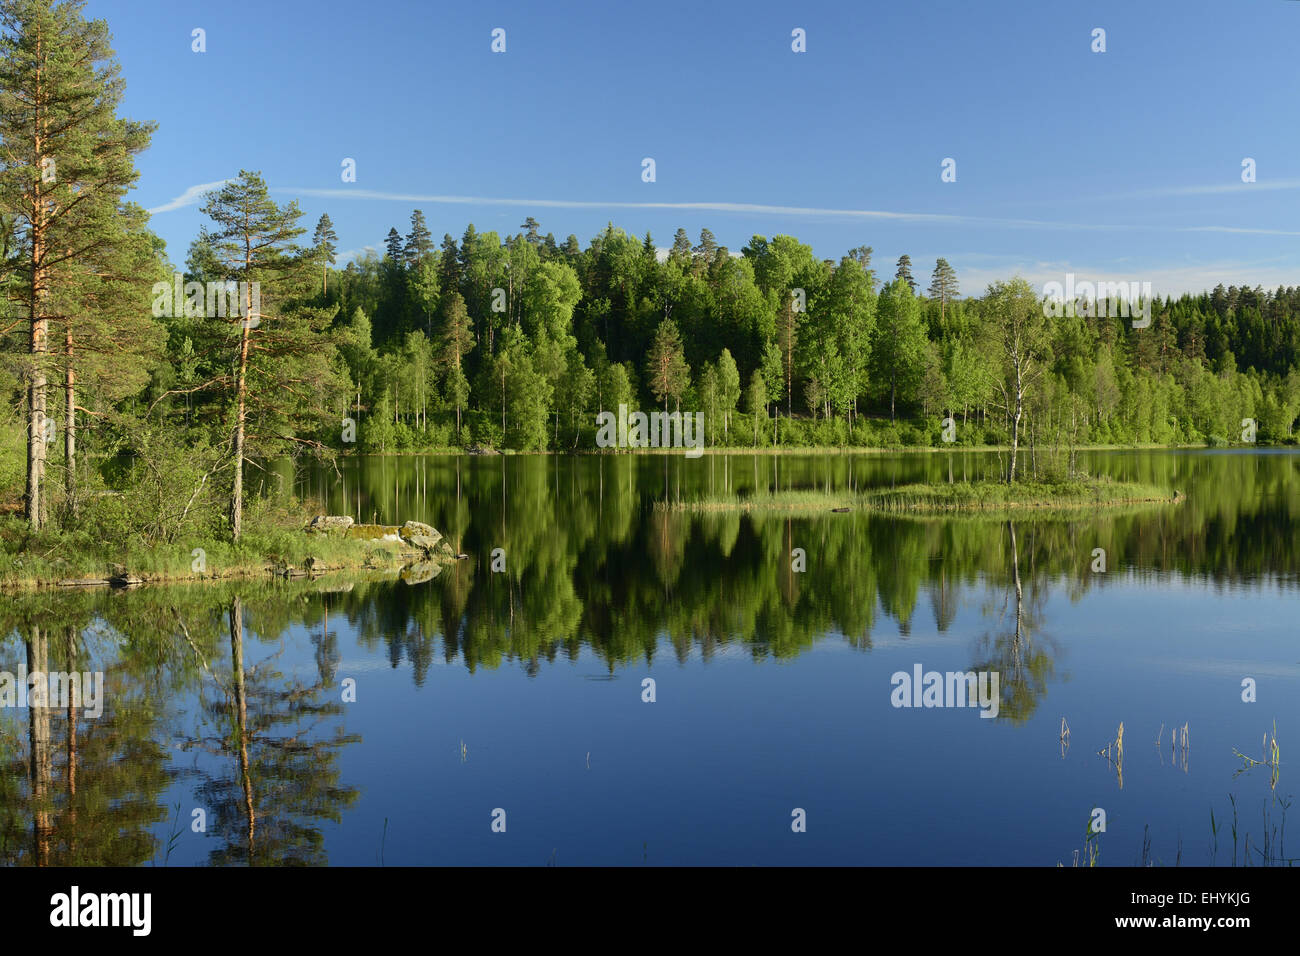 Lake, forest, rfeflections, near Barkerud, Västra Götalands Län, Sweden, Europe, Stock Photo